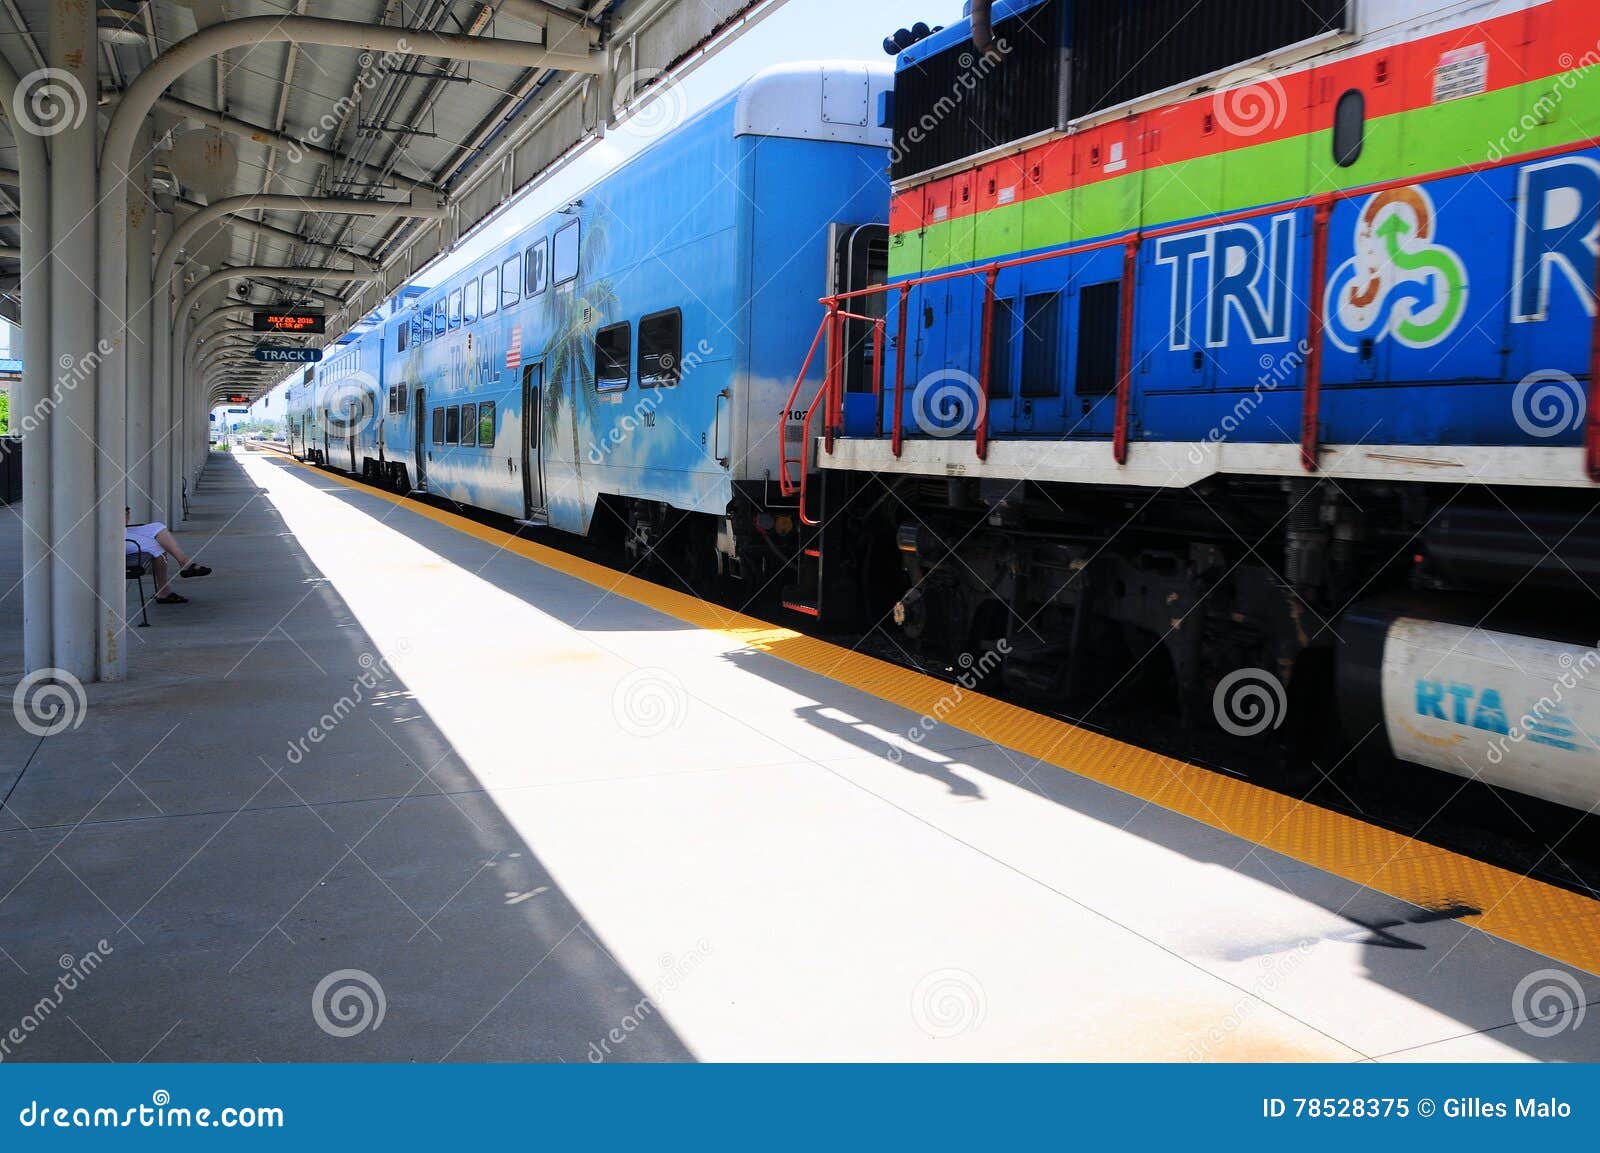 Passenger Train in Boca Raton Station, Florida Editorial Image - Image ...